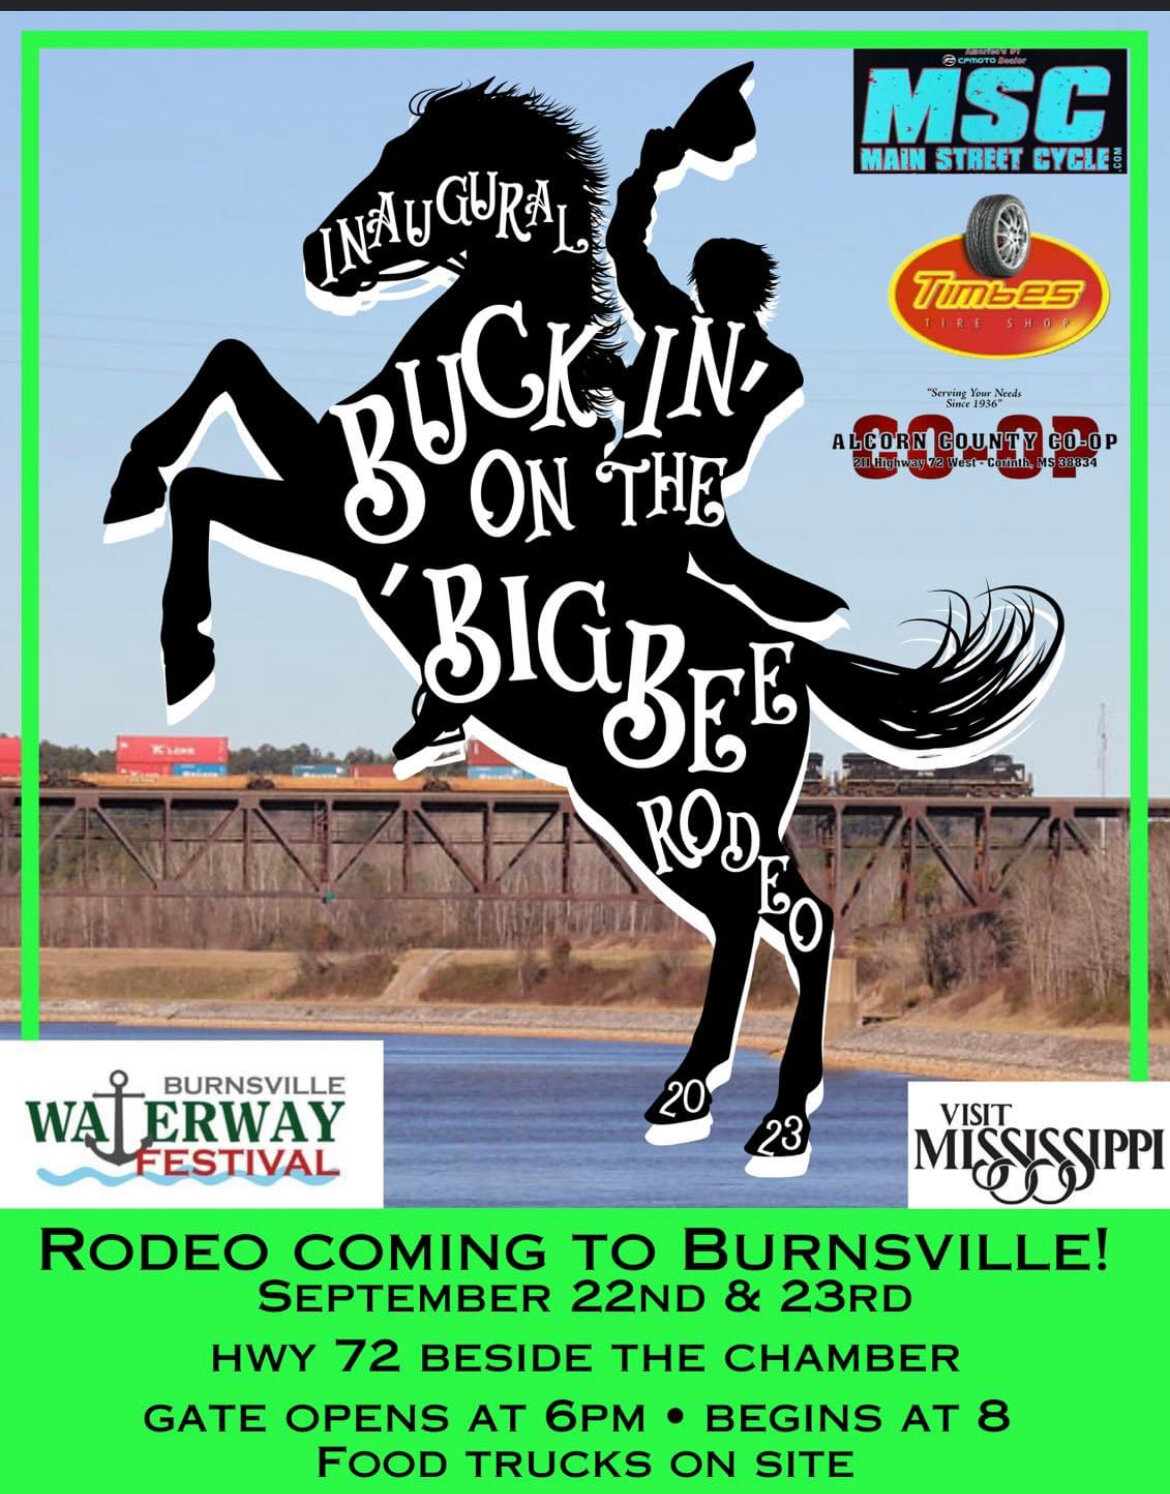 Poster for the Burnsville Waterway Festival